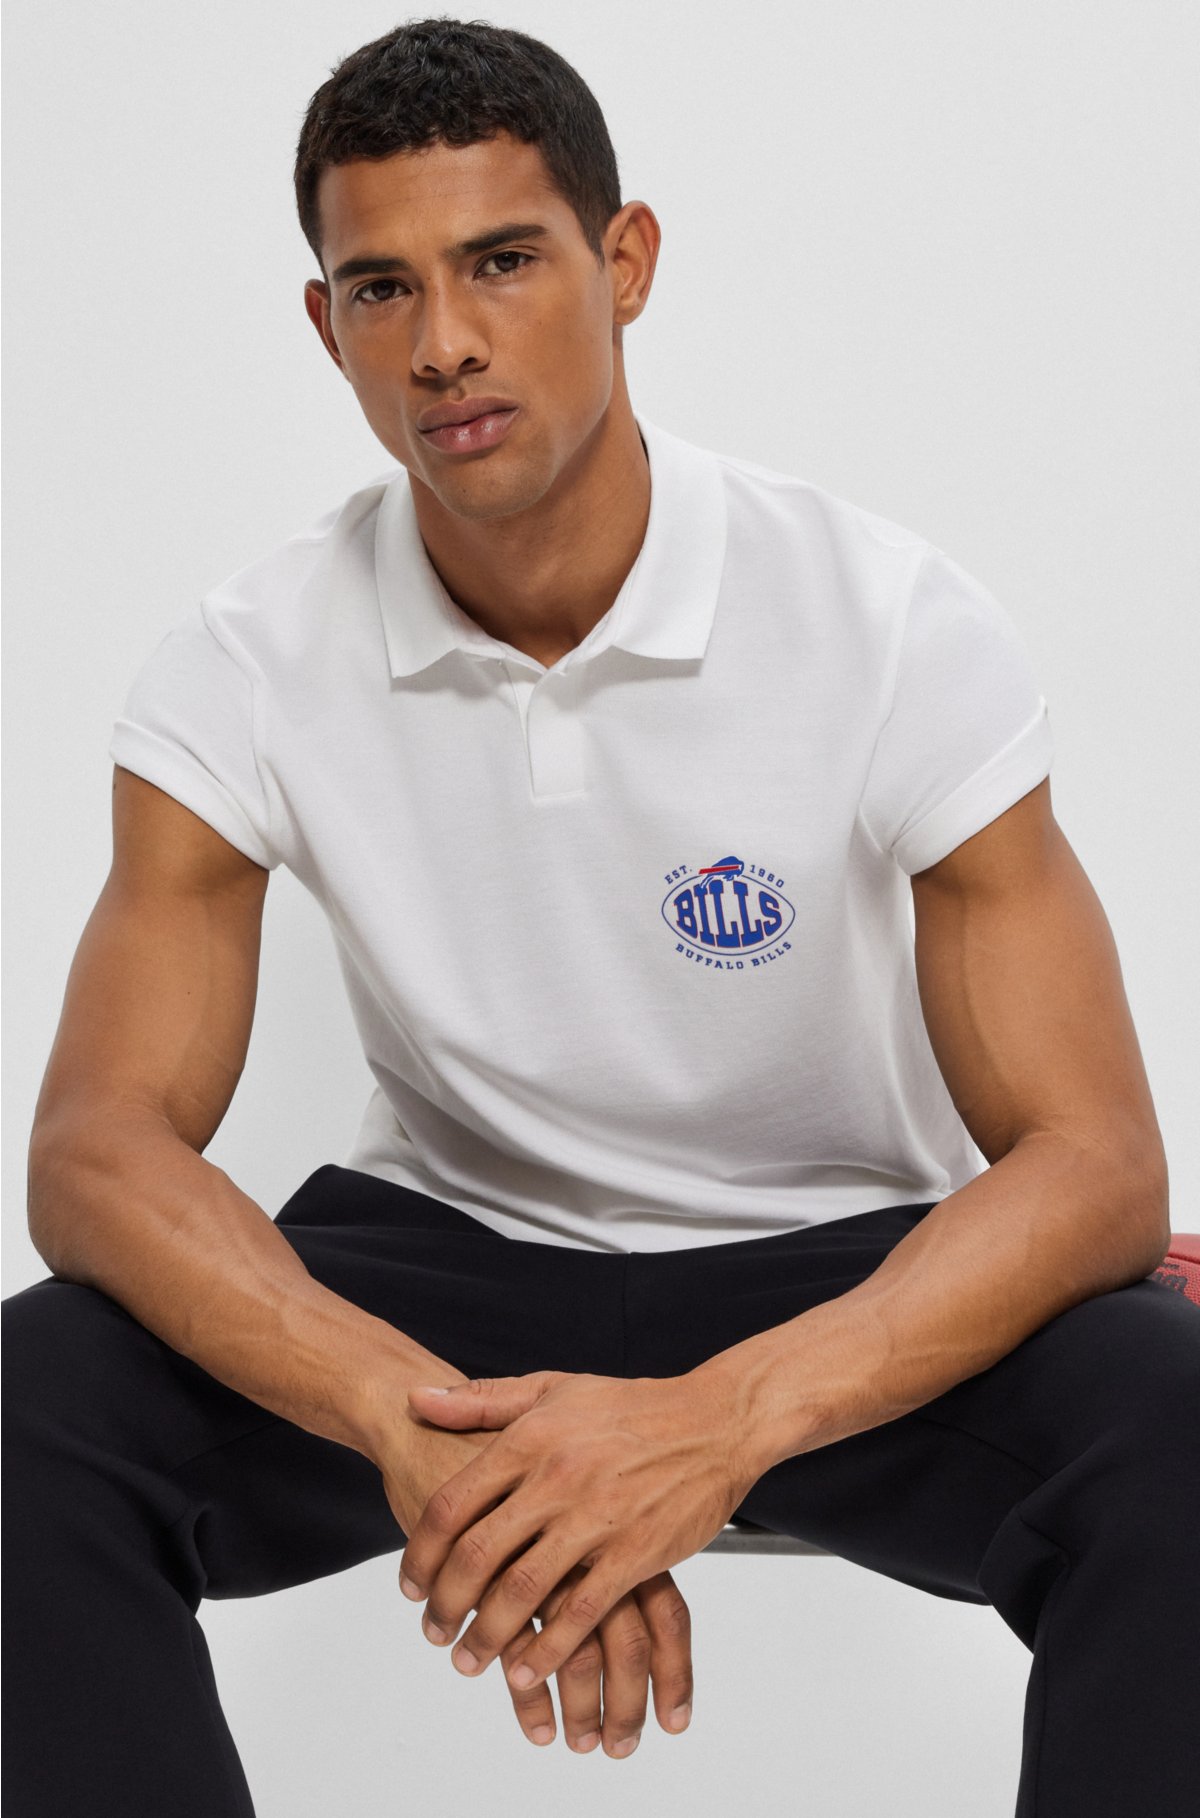 BOSS x NFL cotton-piqué polo shirt with collaborative branding, Bills